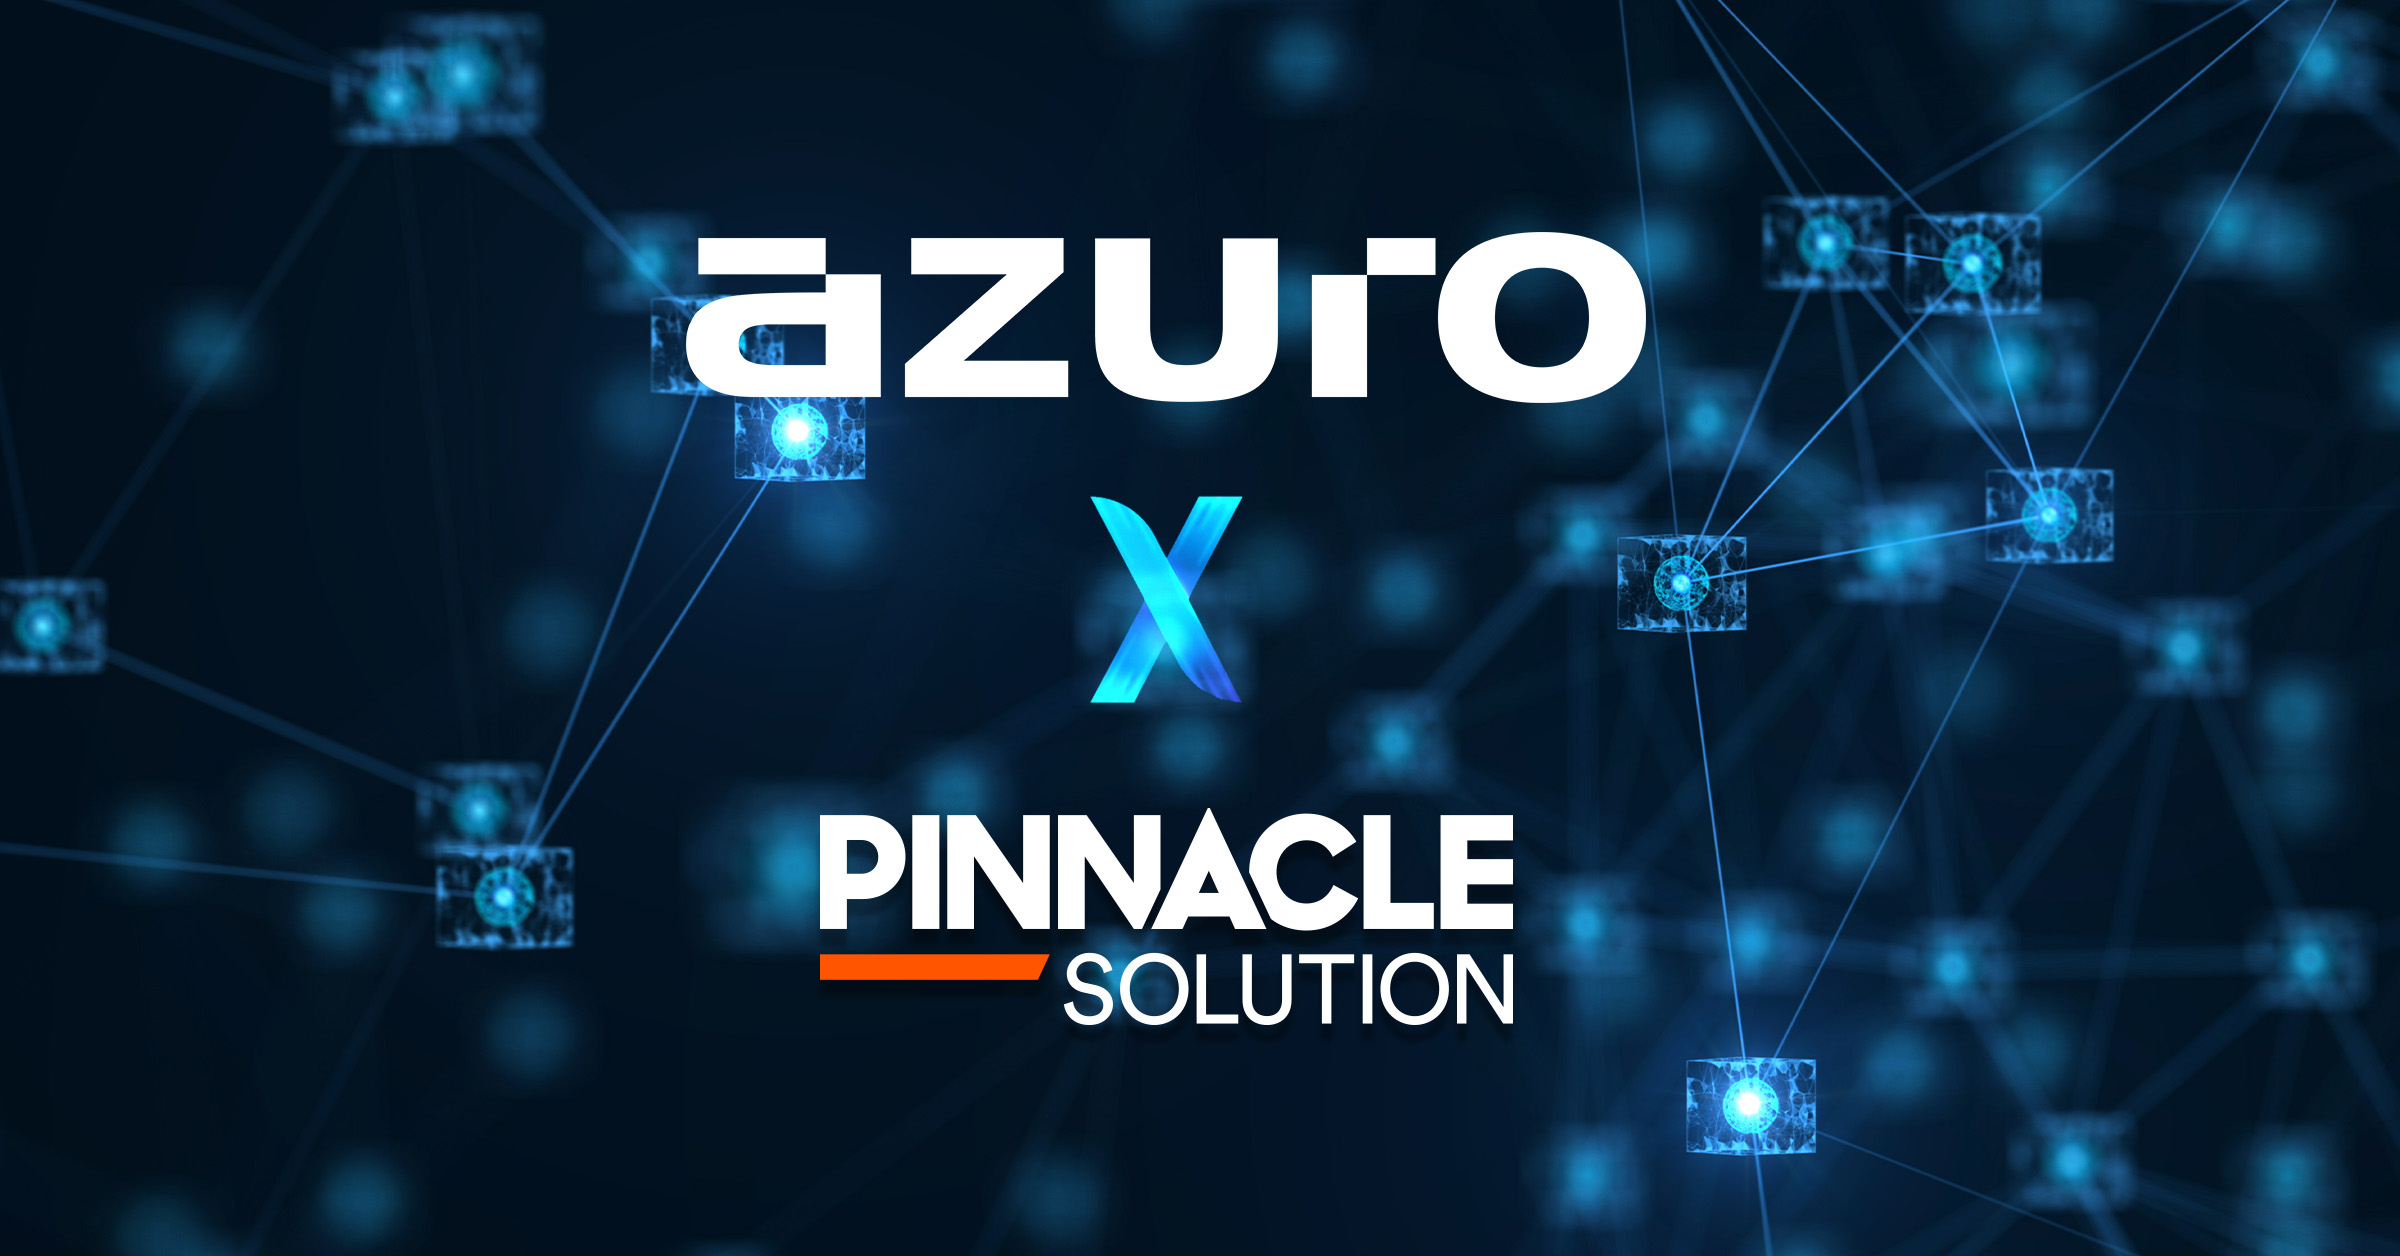 Pinnacle Solution Azuro